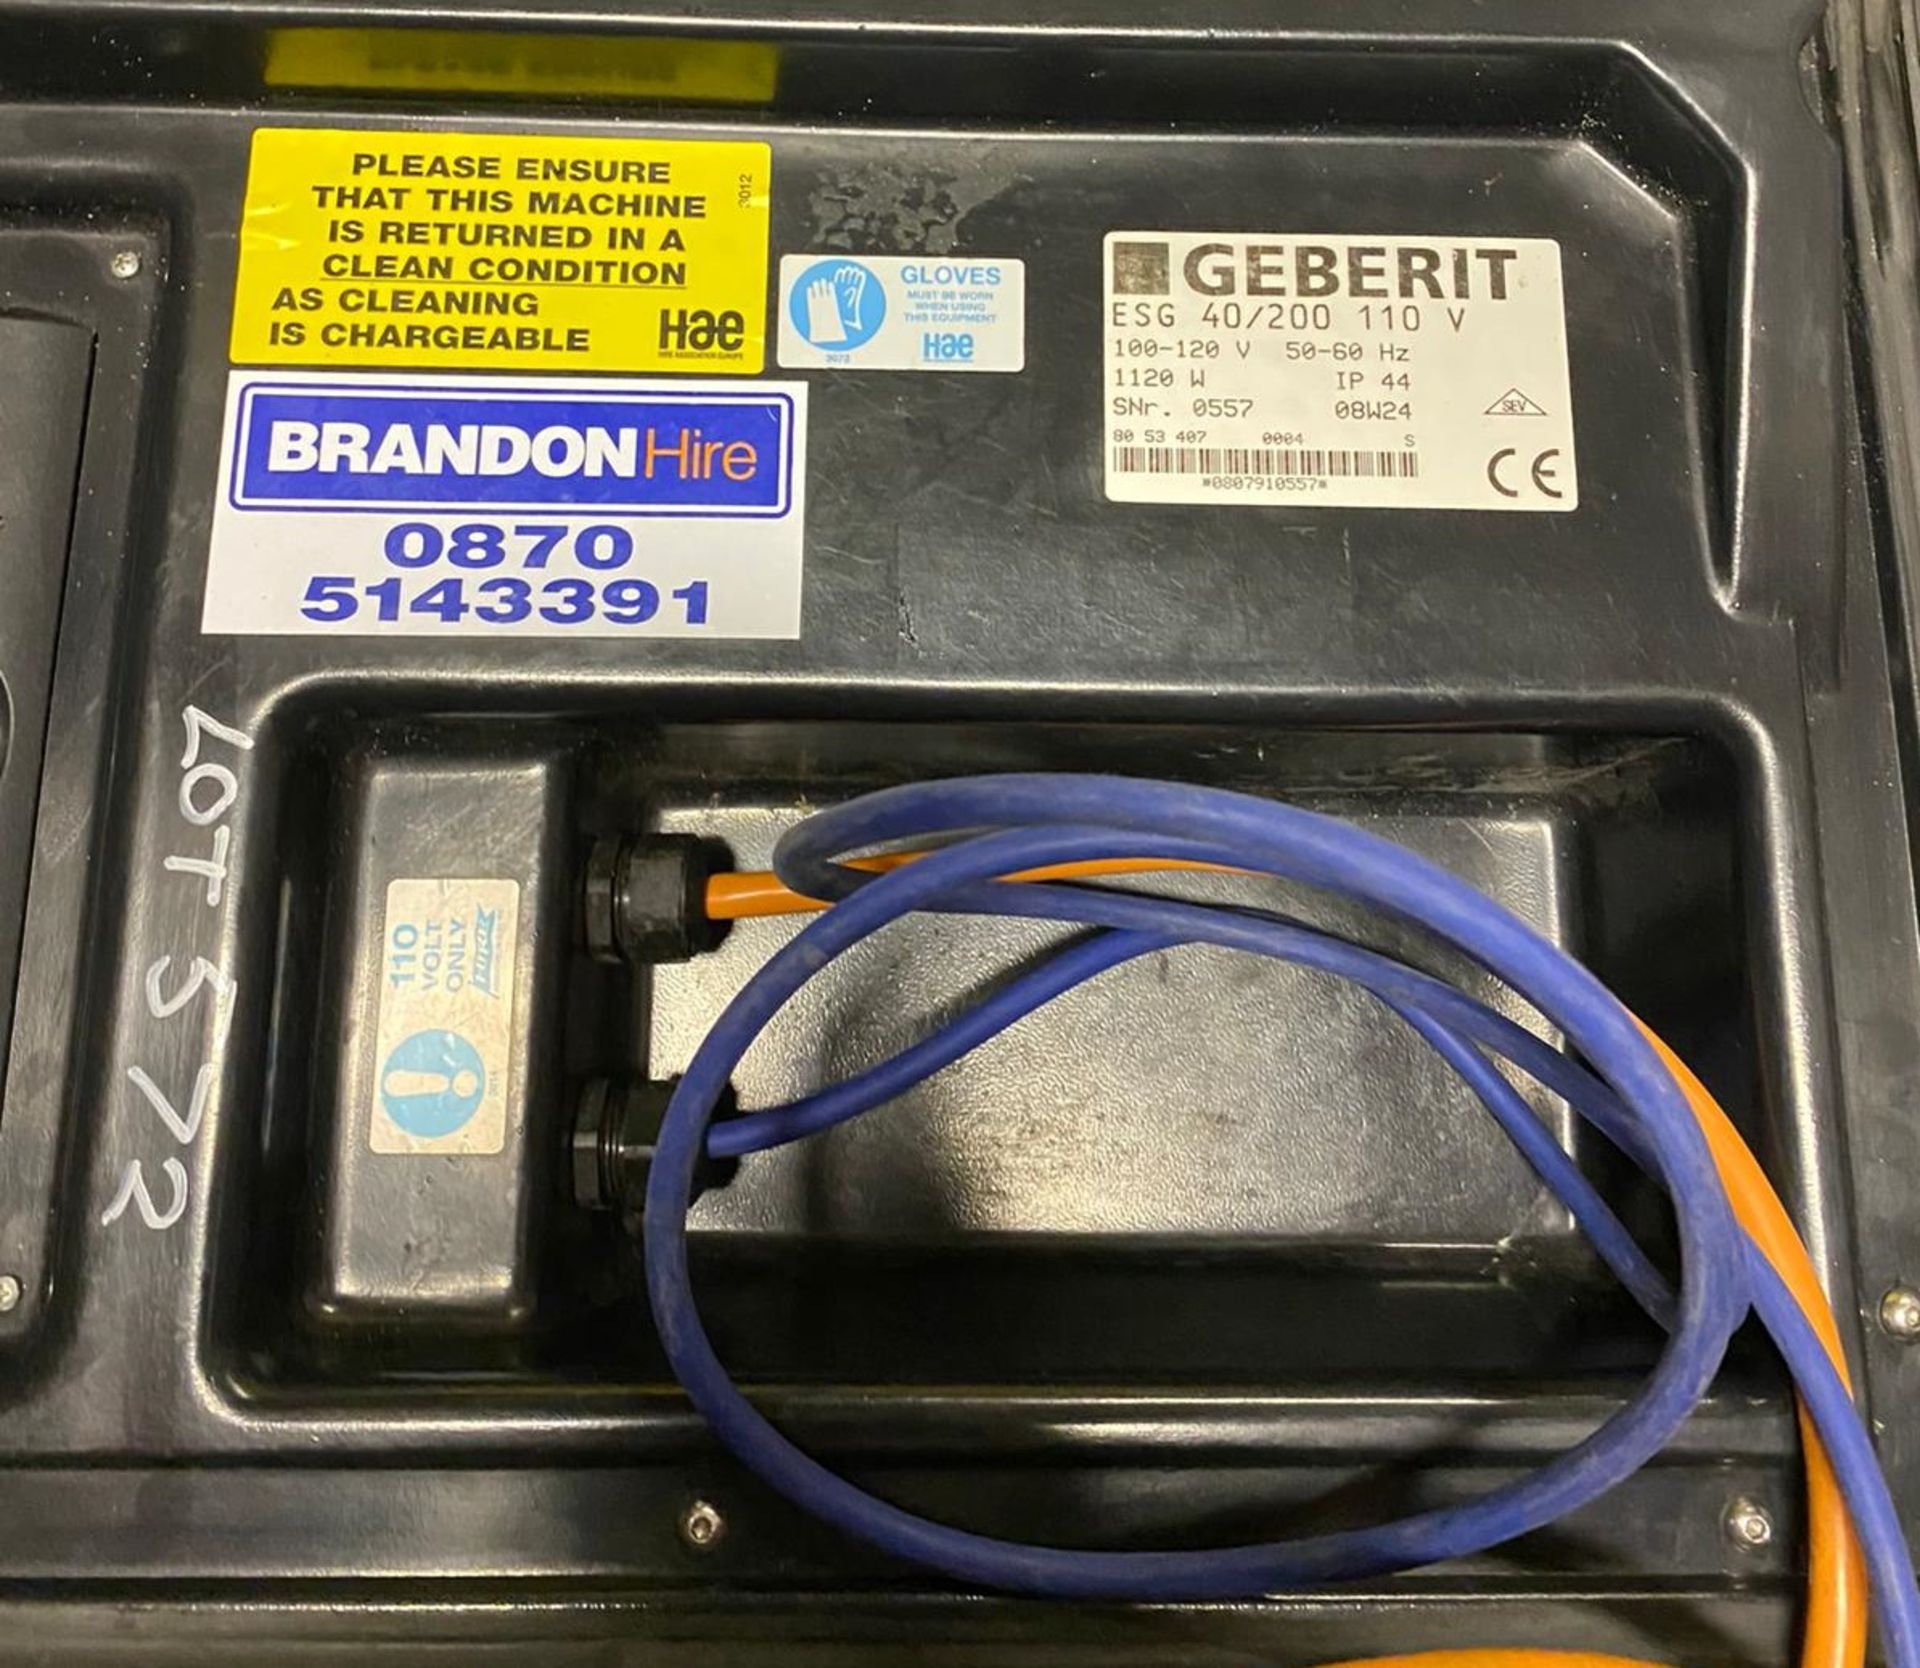 1 x Geberit Esg 40/200 110V Pipe Welding Kit - Used condition - CL011 - Location: Altrincham WA14